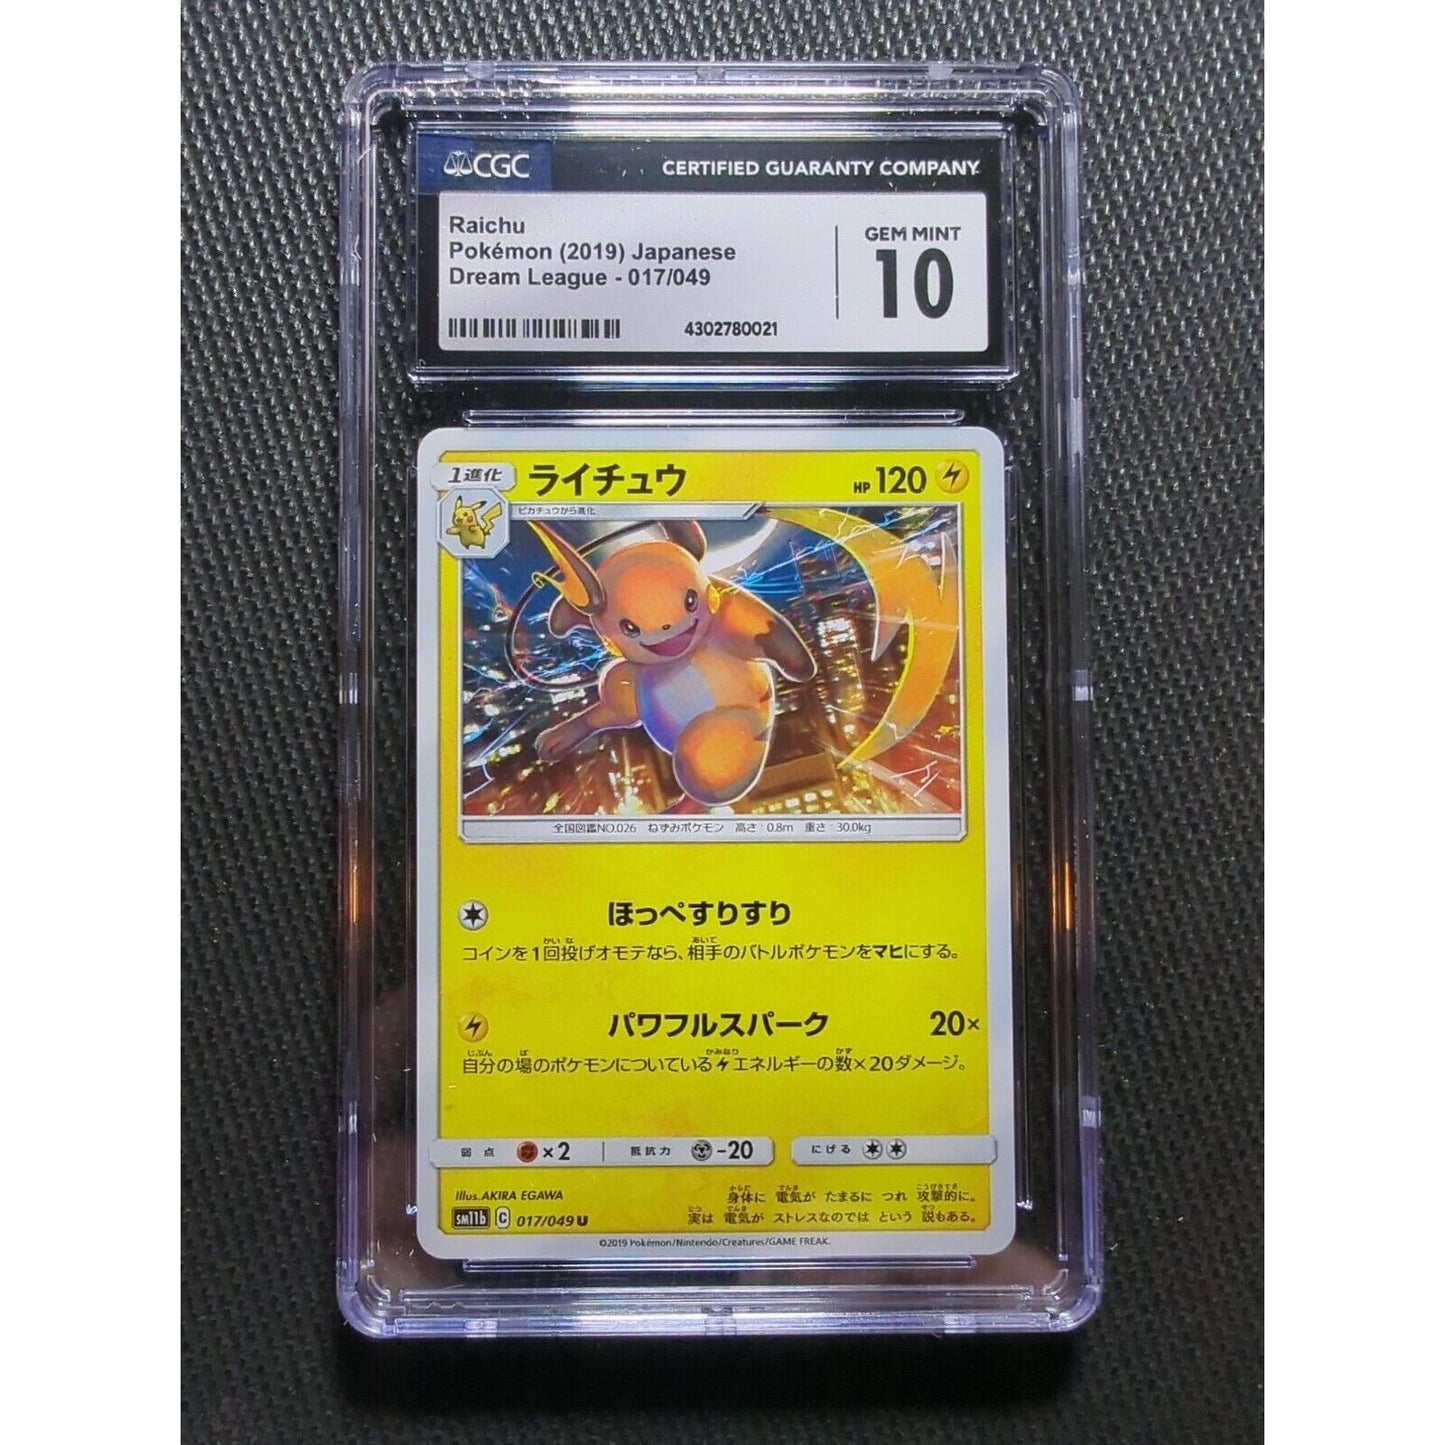 CGC Gem Mint 10 - Pokemon Raichu 017/049 Dream League | Japanese